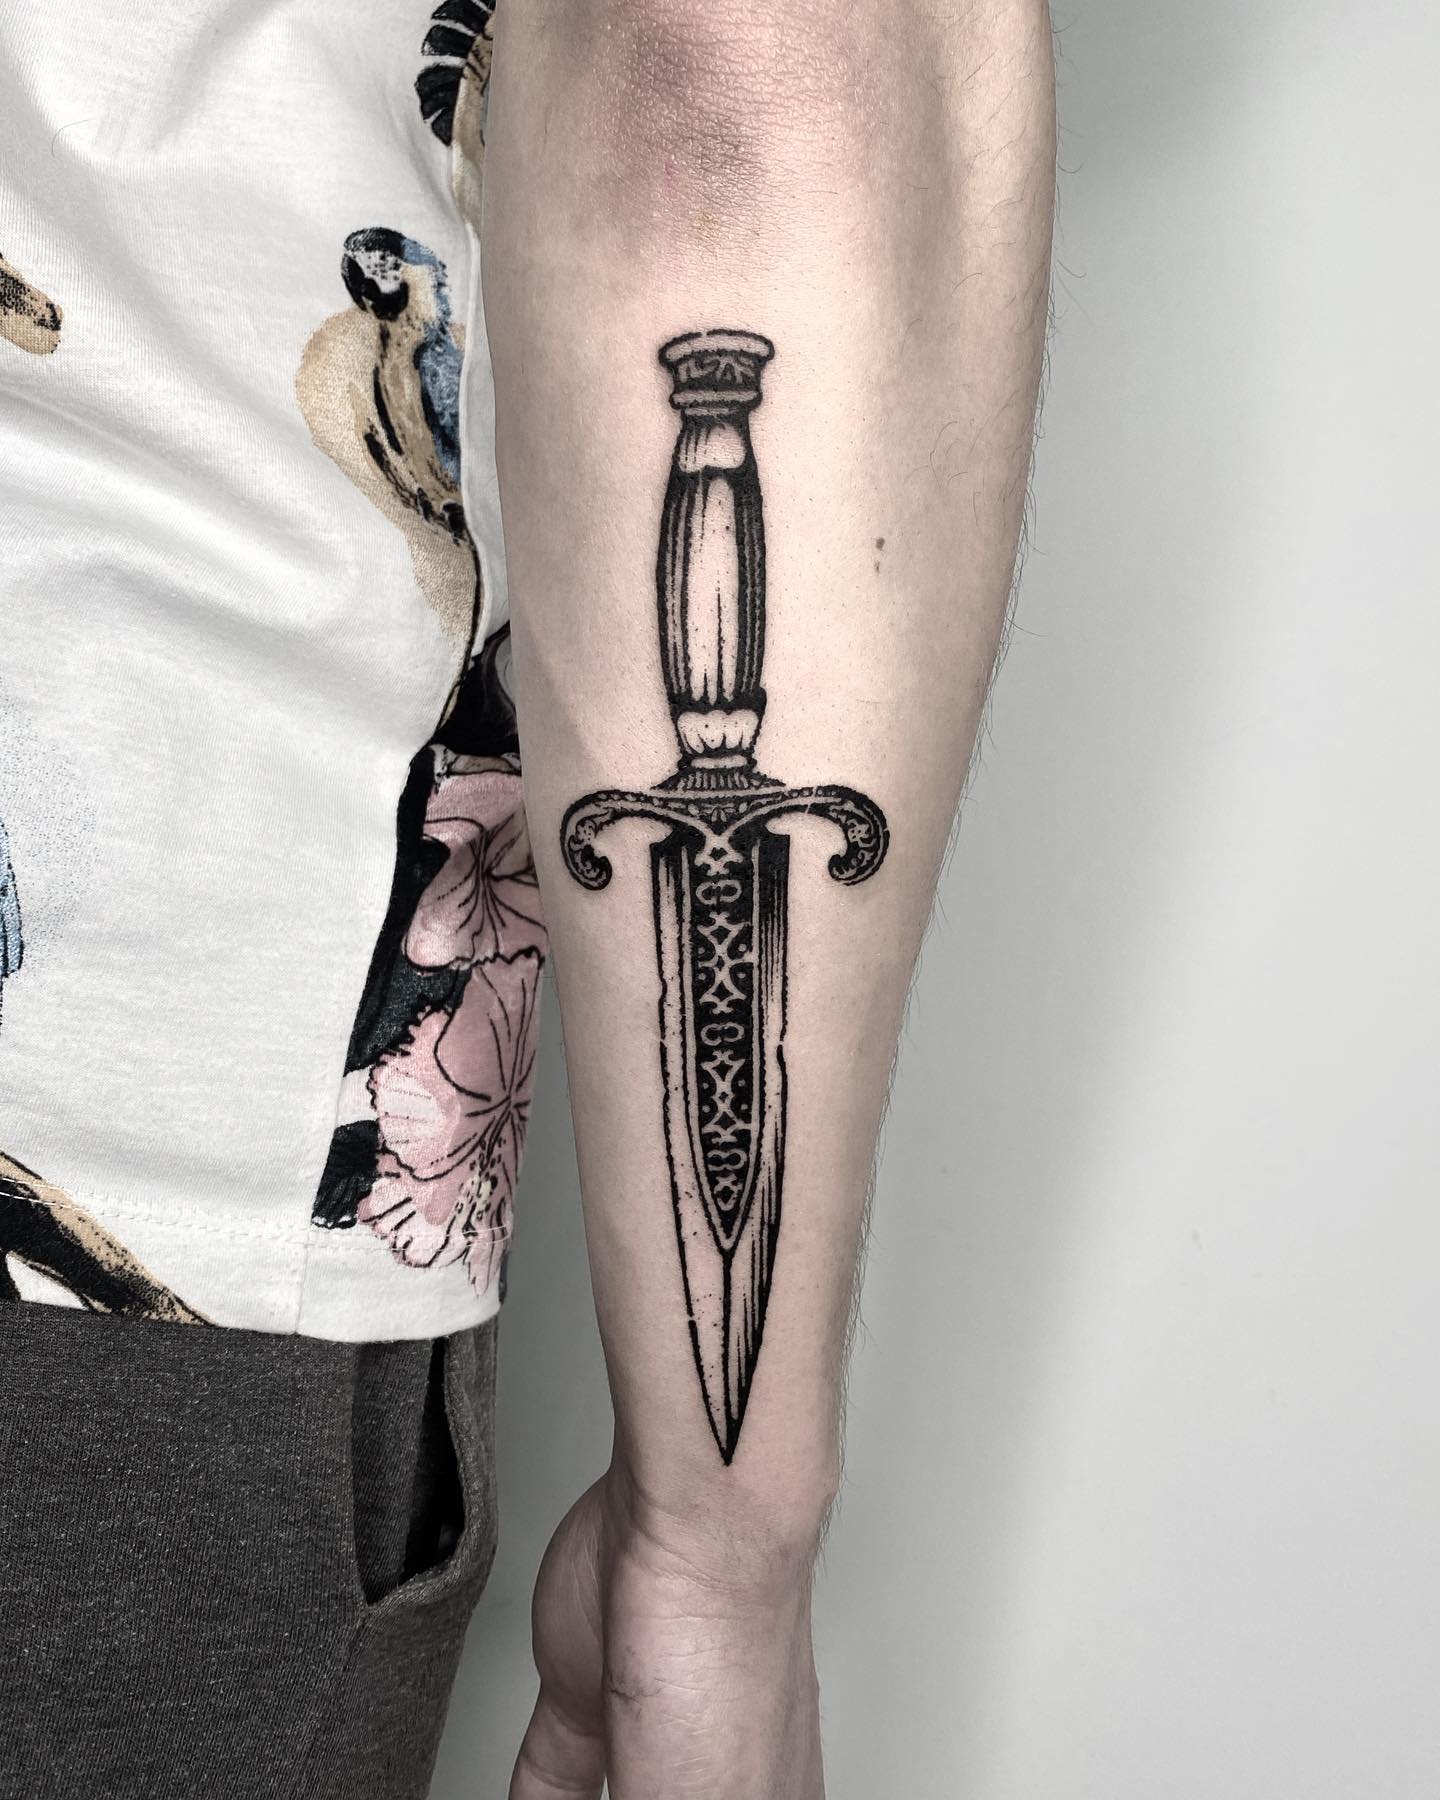 Knife tattoo done by Imara  Blue Moon Co in Melbourne FL  rtattoo